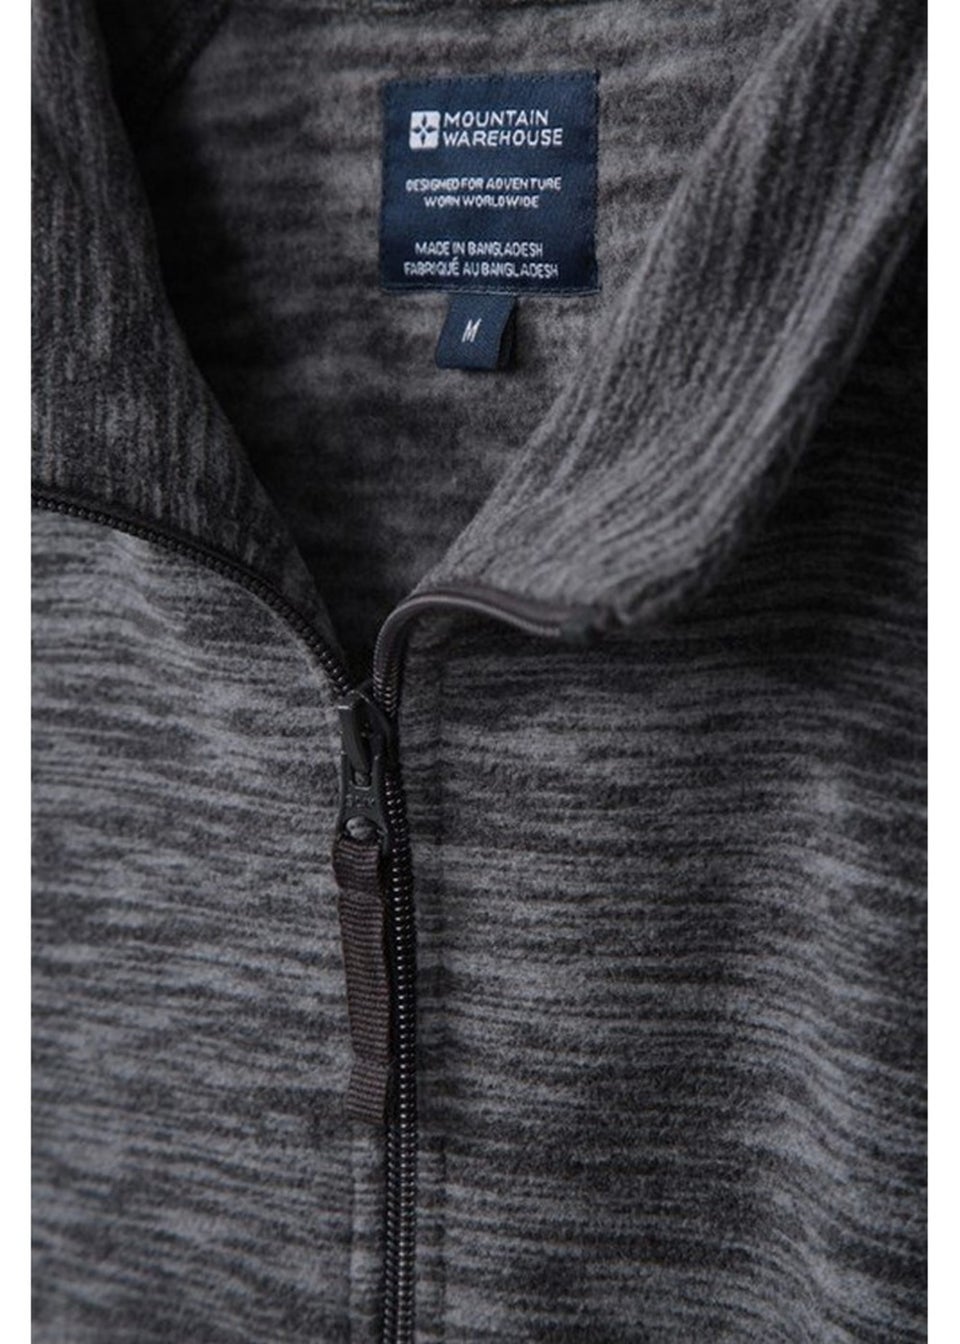 Mountain Warehouse Charcoal Snowdon Marl Fleece Jacket - Matalan